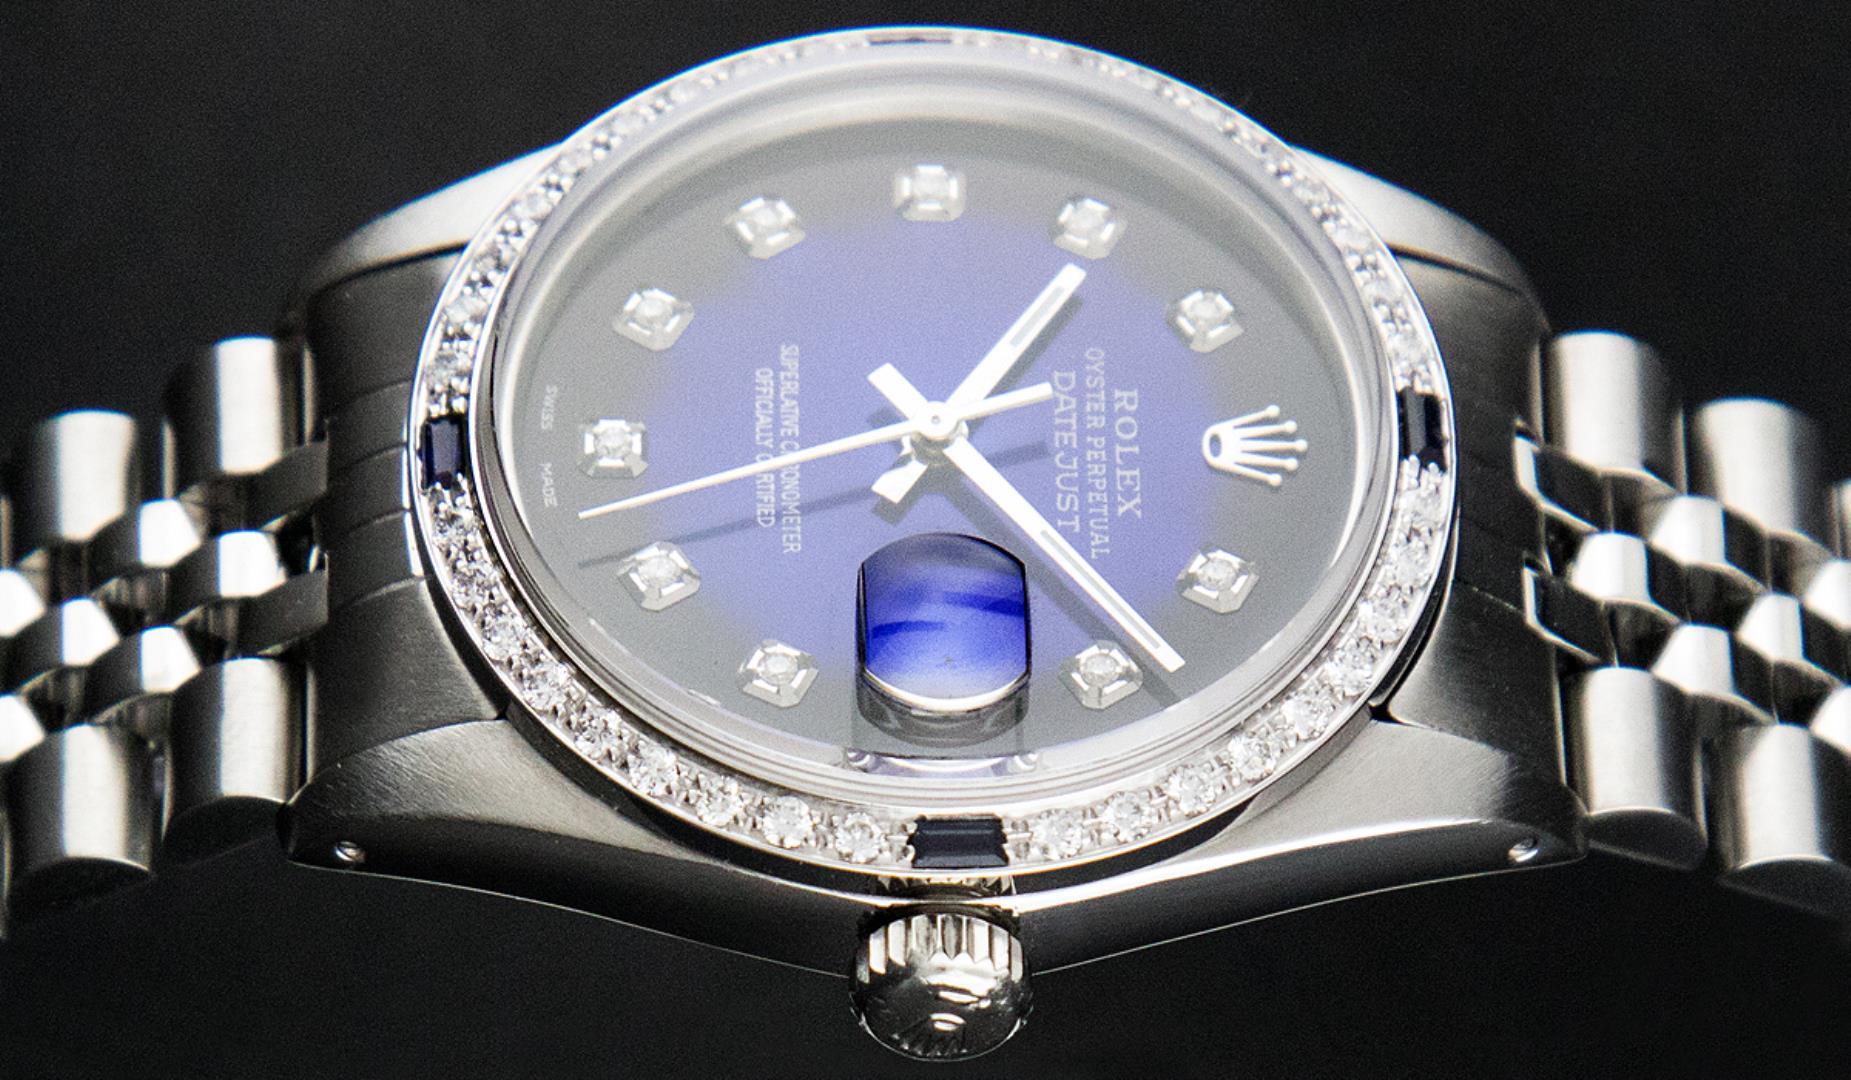 Rolex Mens Stainless Steel Blue Vignette Diamond And Sapphire Datejust Wristwatc